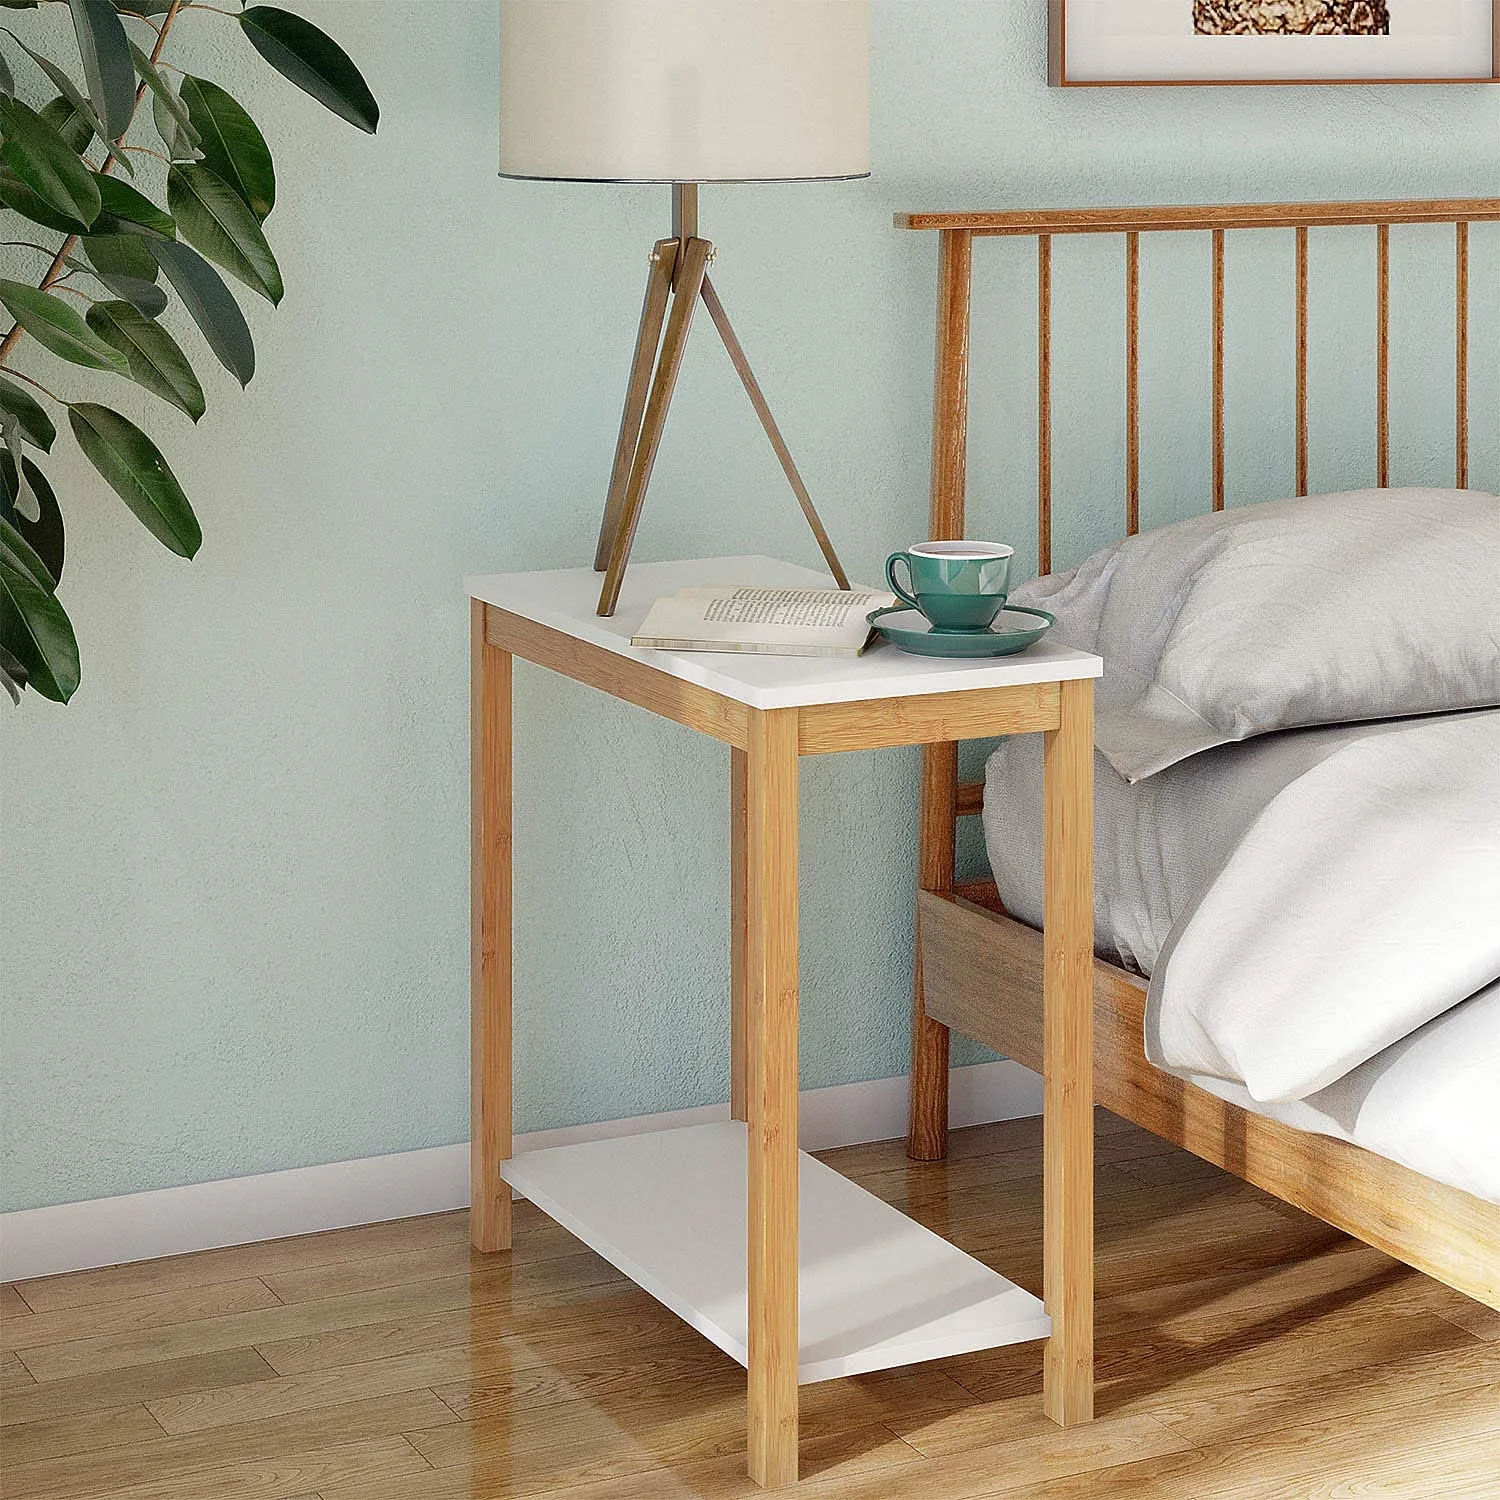 Living Room Bamboo Plant shelf rack Nightstand Storage Table Bedside Table